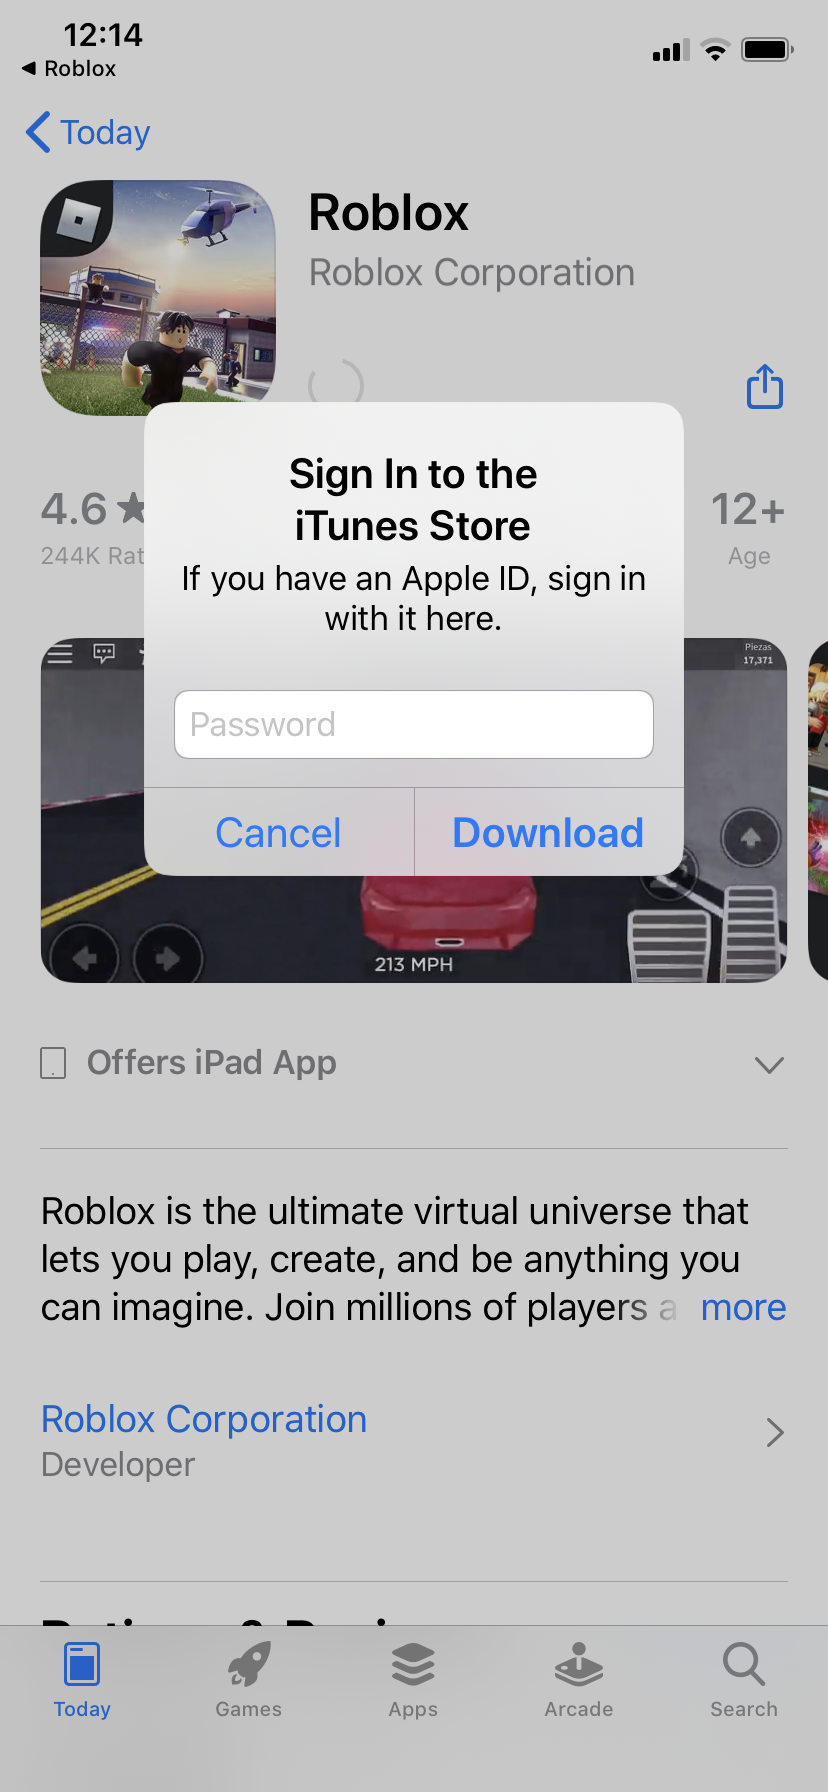 Update If An App Apple Id Apple Community - roblox image ids apple